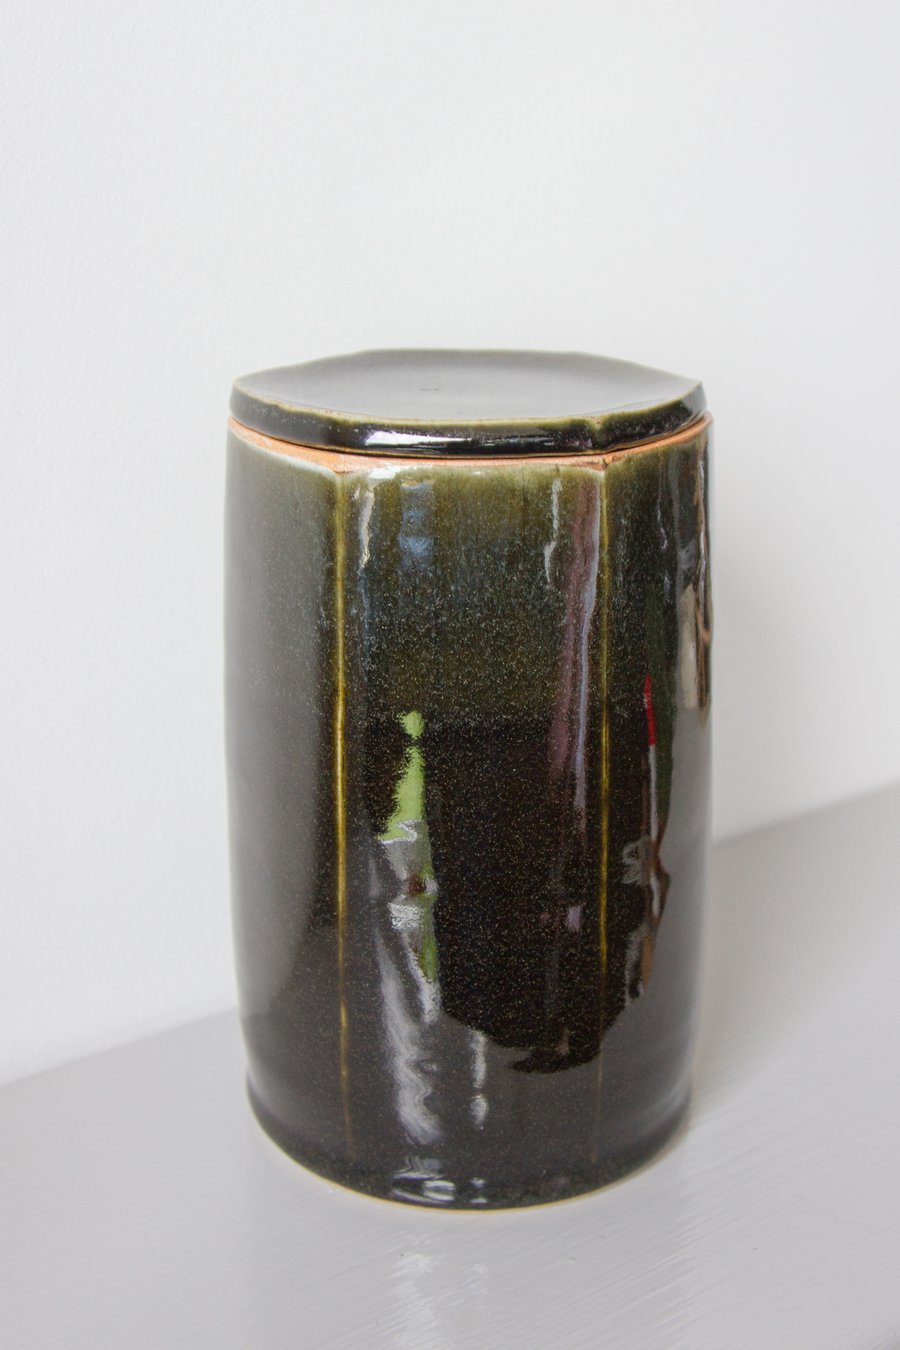 Hexagonal Lidded Jar in Dark Green and Celadon Glazes - Handmade